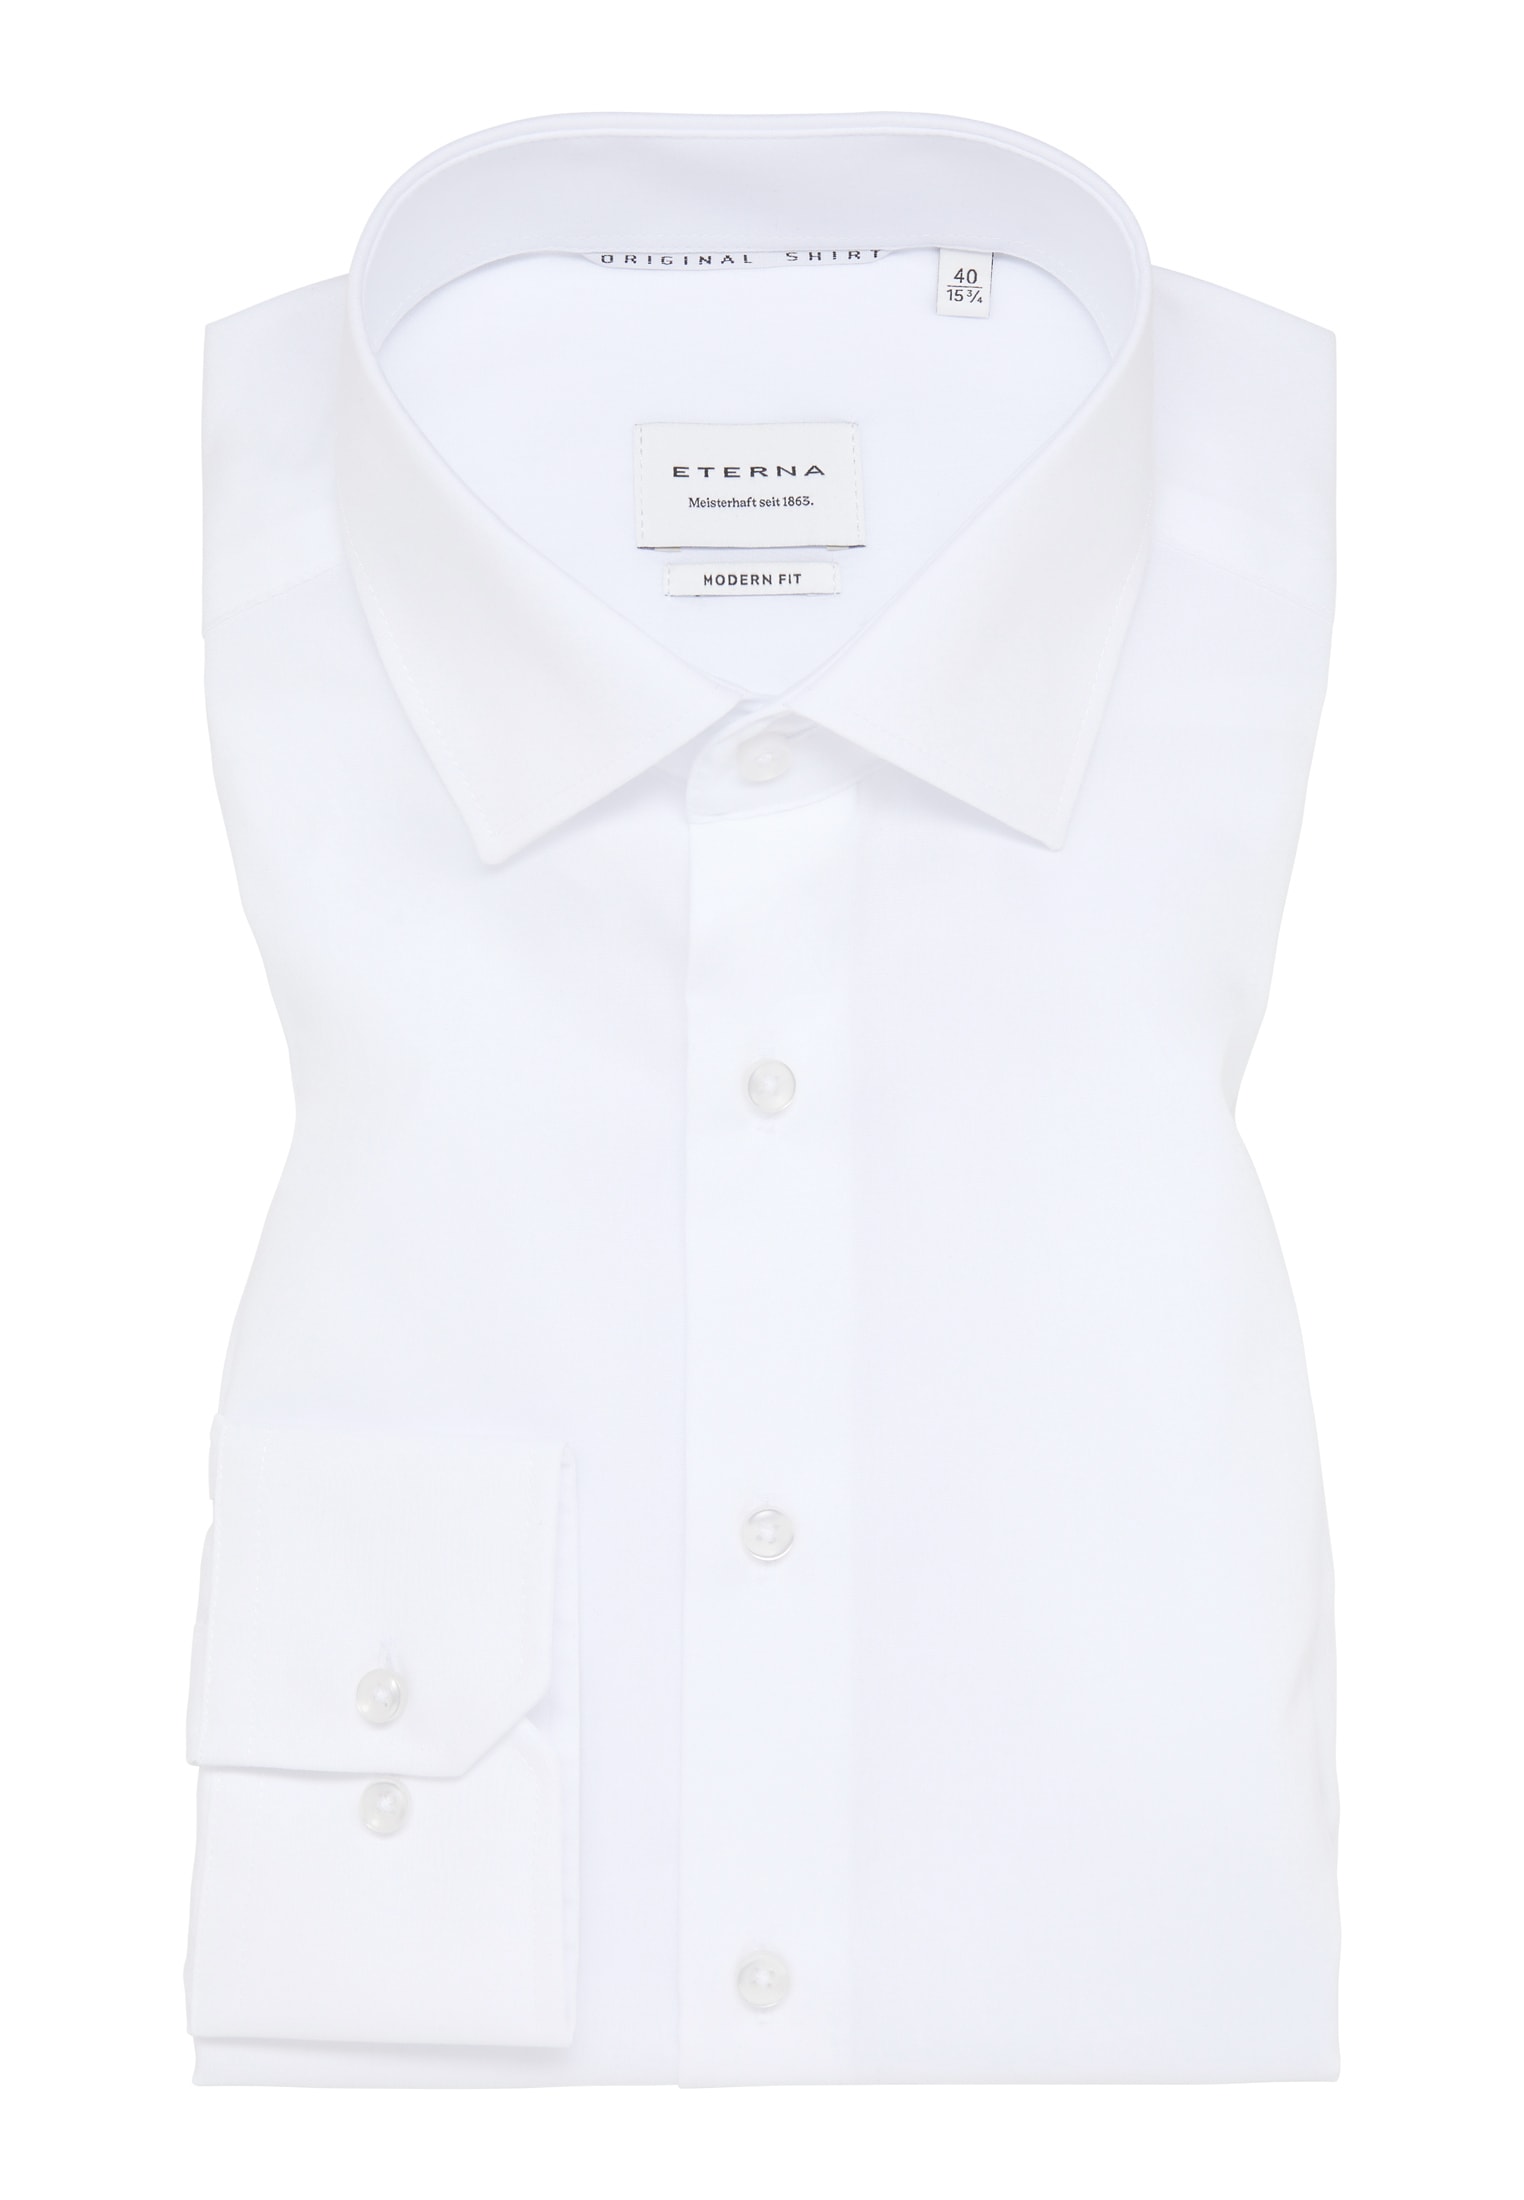 MODERN FIT Original Shirt in weiß unifarben | weiß | 38 | Langarm |  1SH12596-00-01-38-1/1